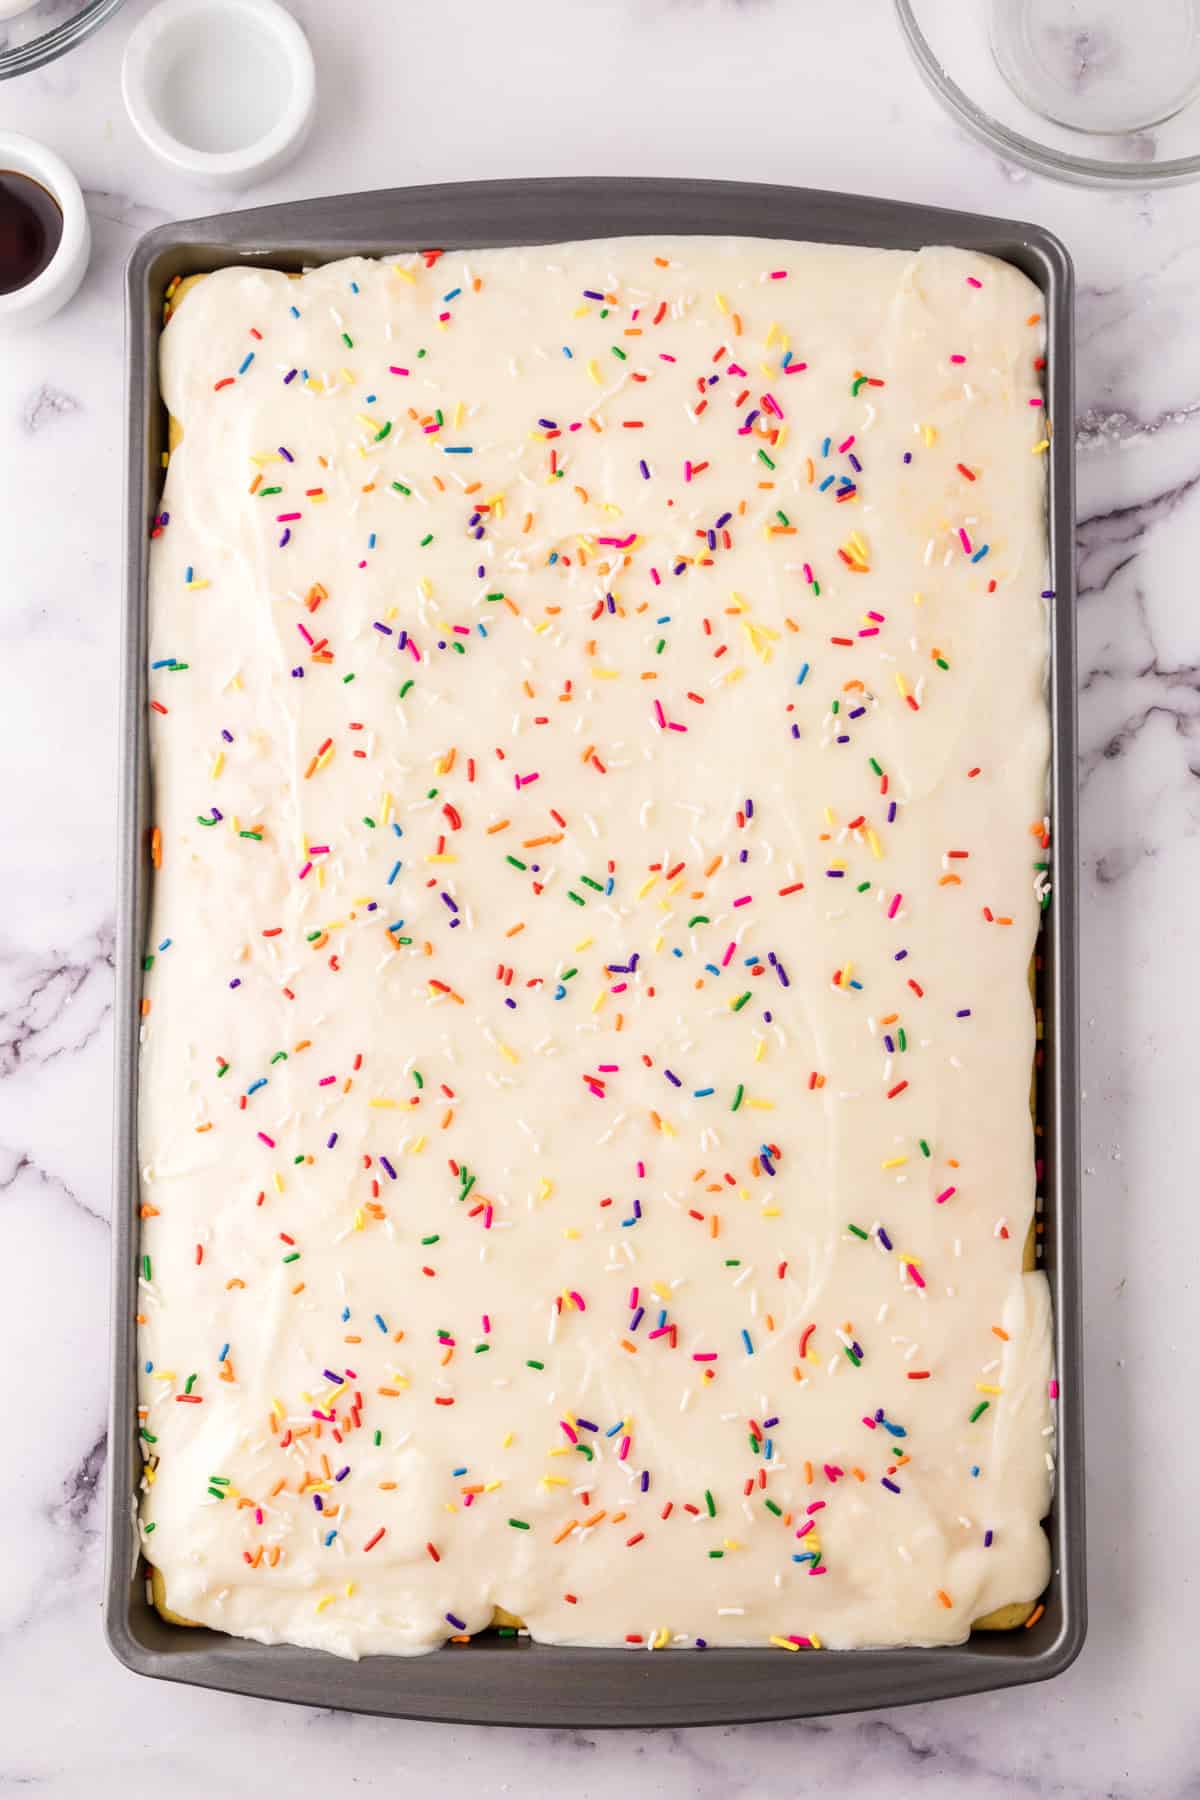 Vanilla sheet cake recipe.